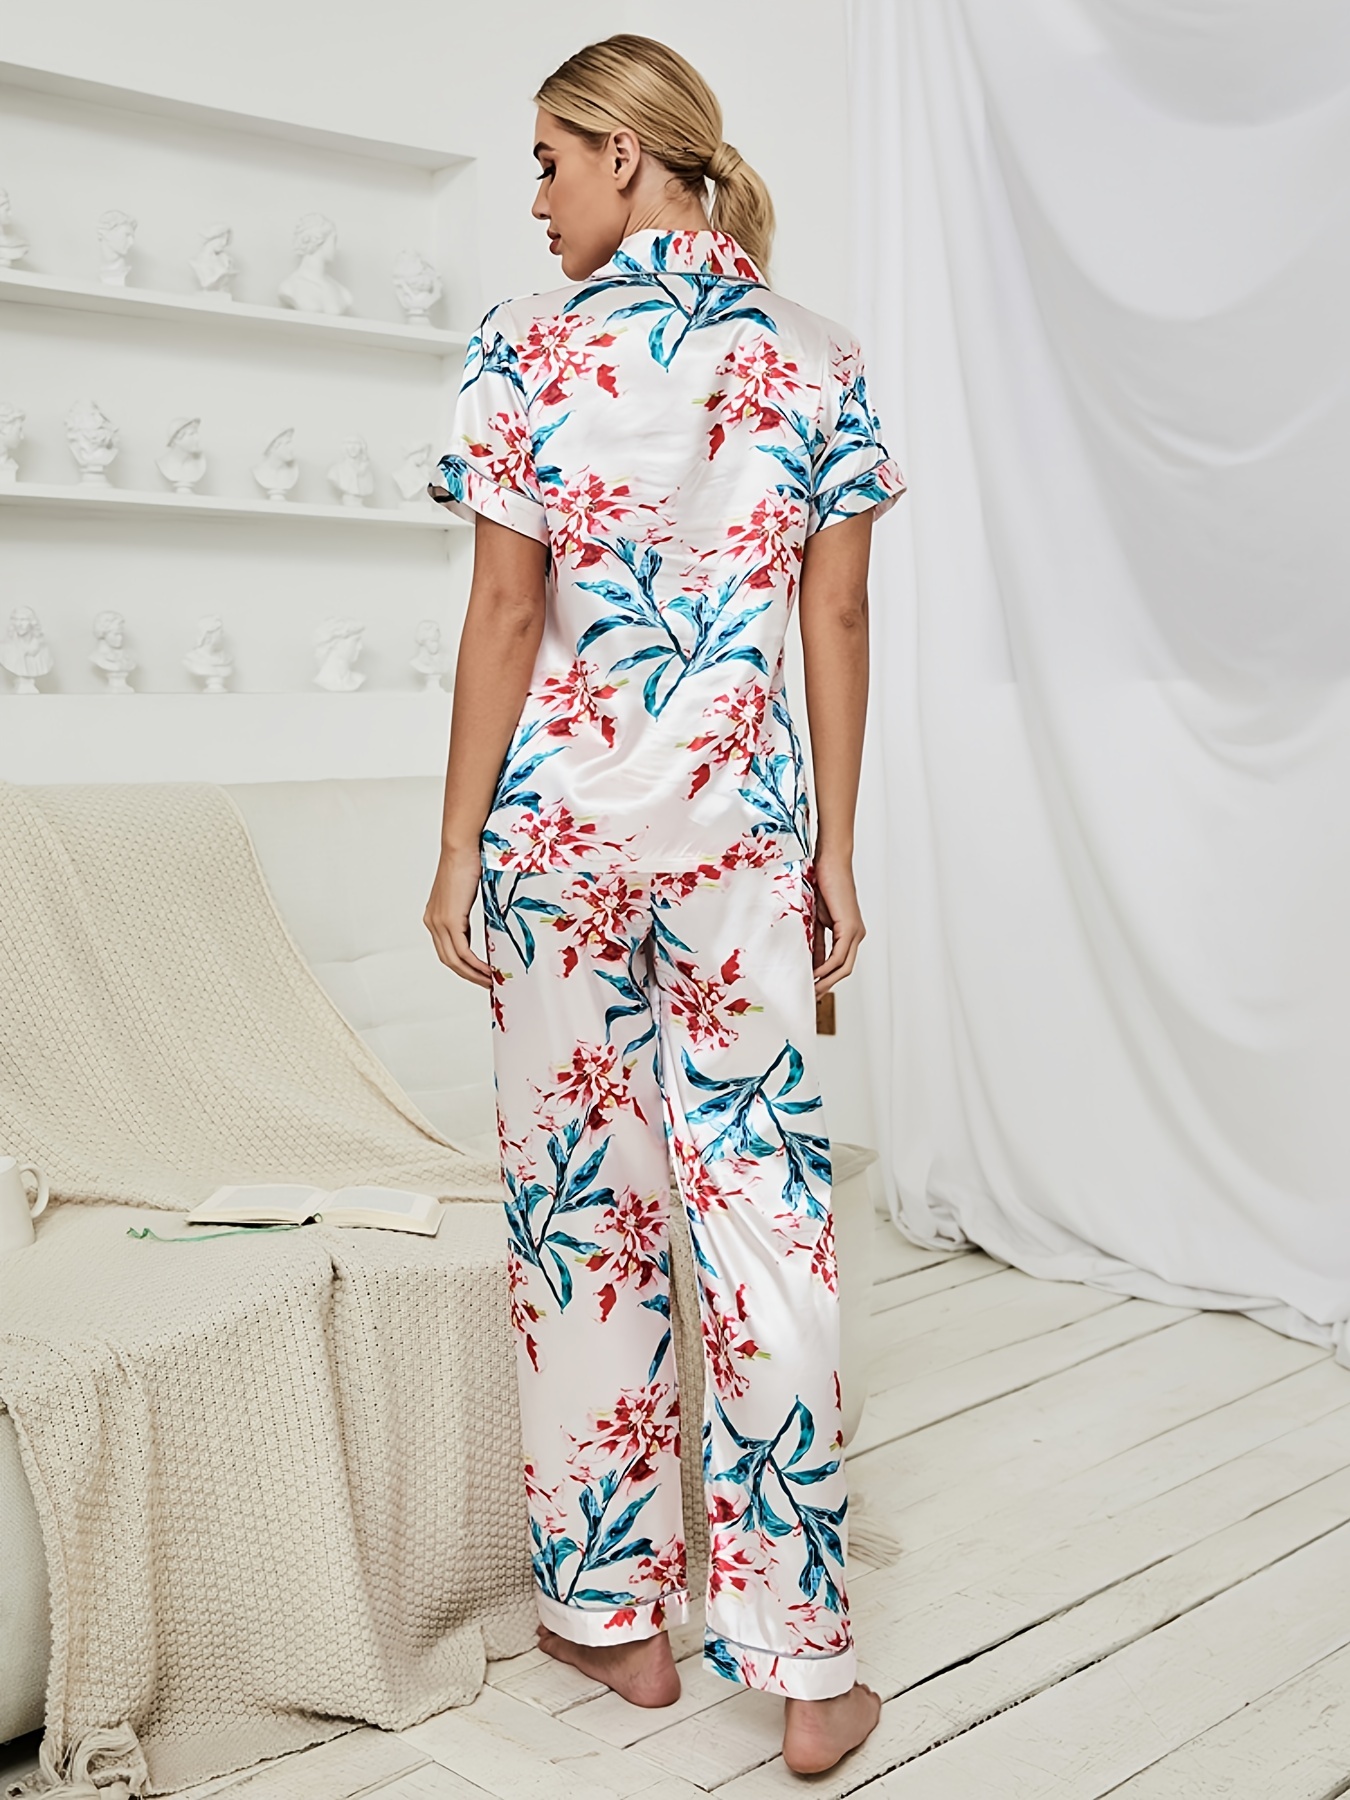 Elegant Satin Floral Print Pajamas Set, Lightweight Button Up Blouse Pajama  Top & Elastic Waistband Pajama Pants, Women's Loungewear & Sleepwear